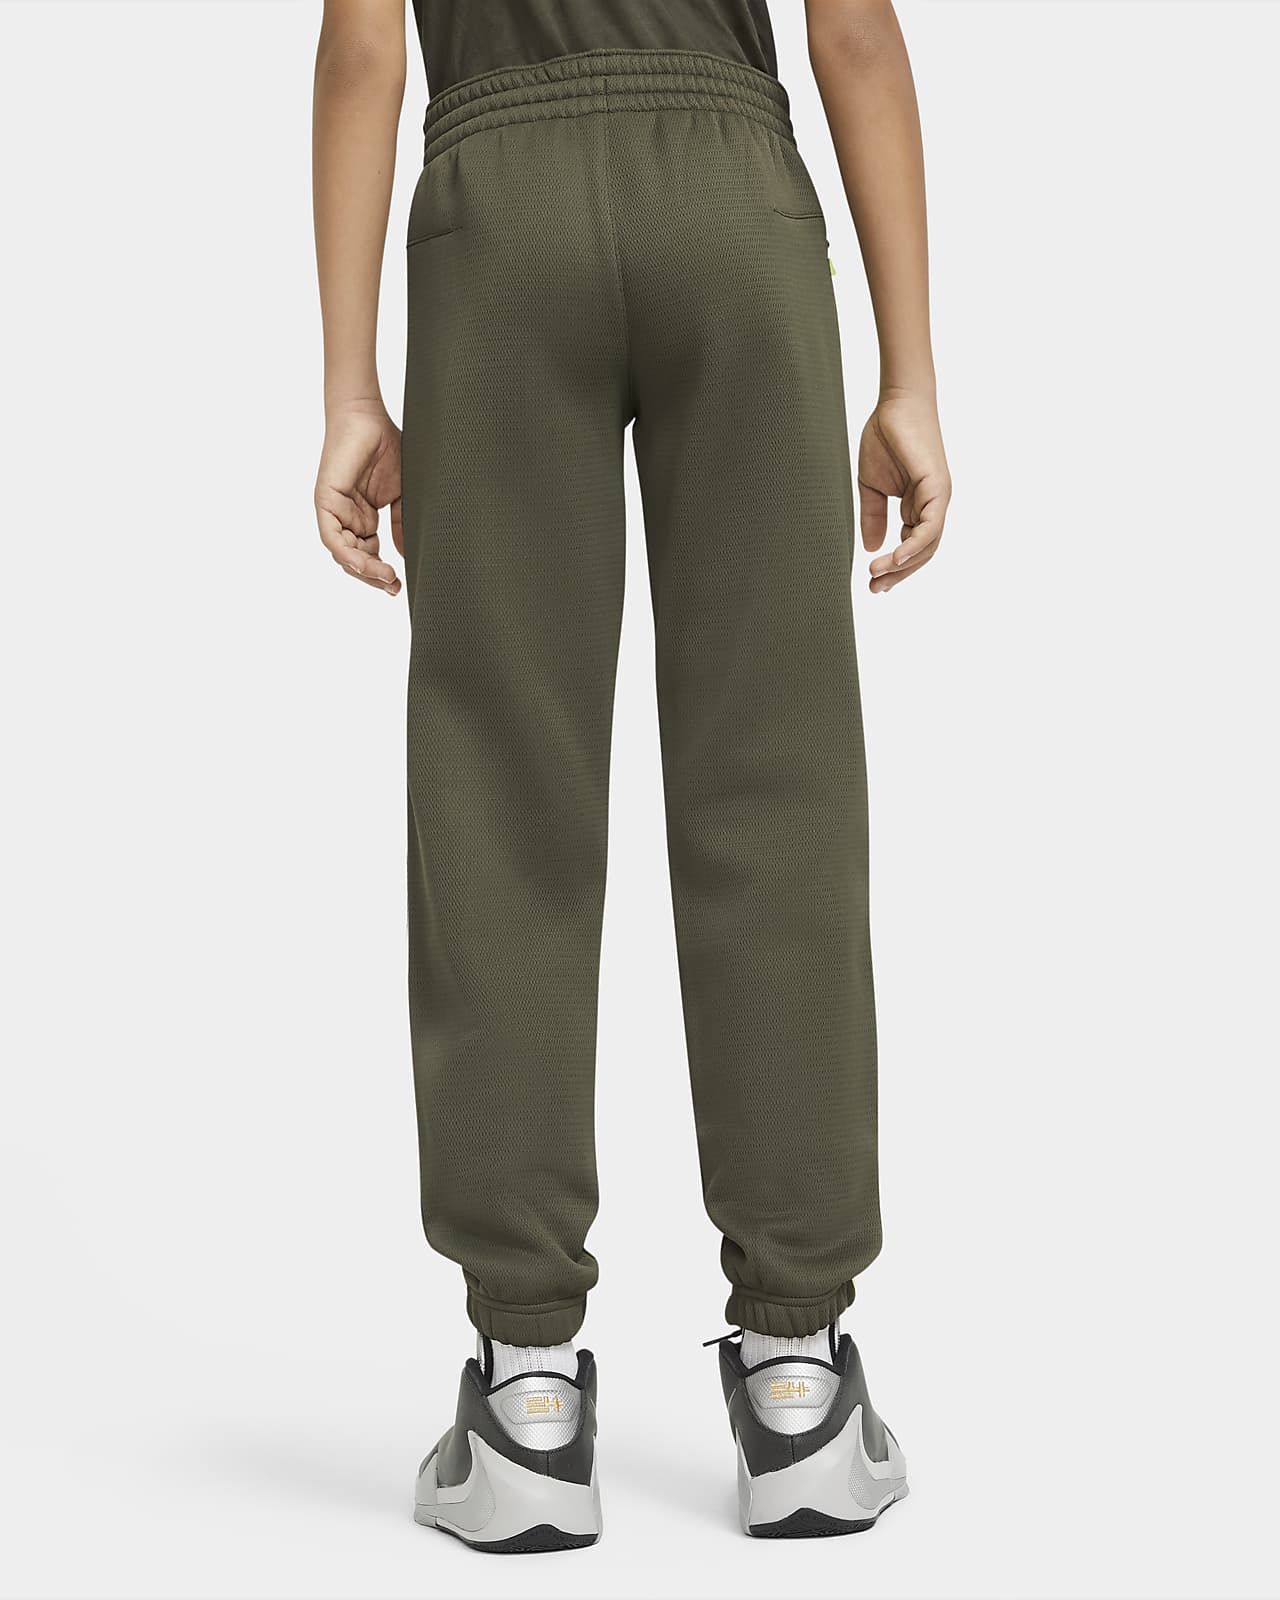 nike jogger pants with zipper pockets